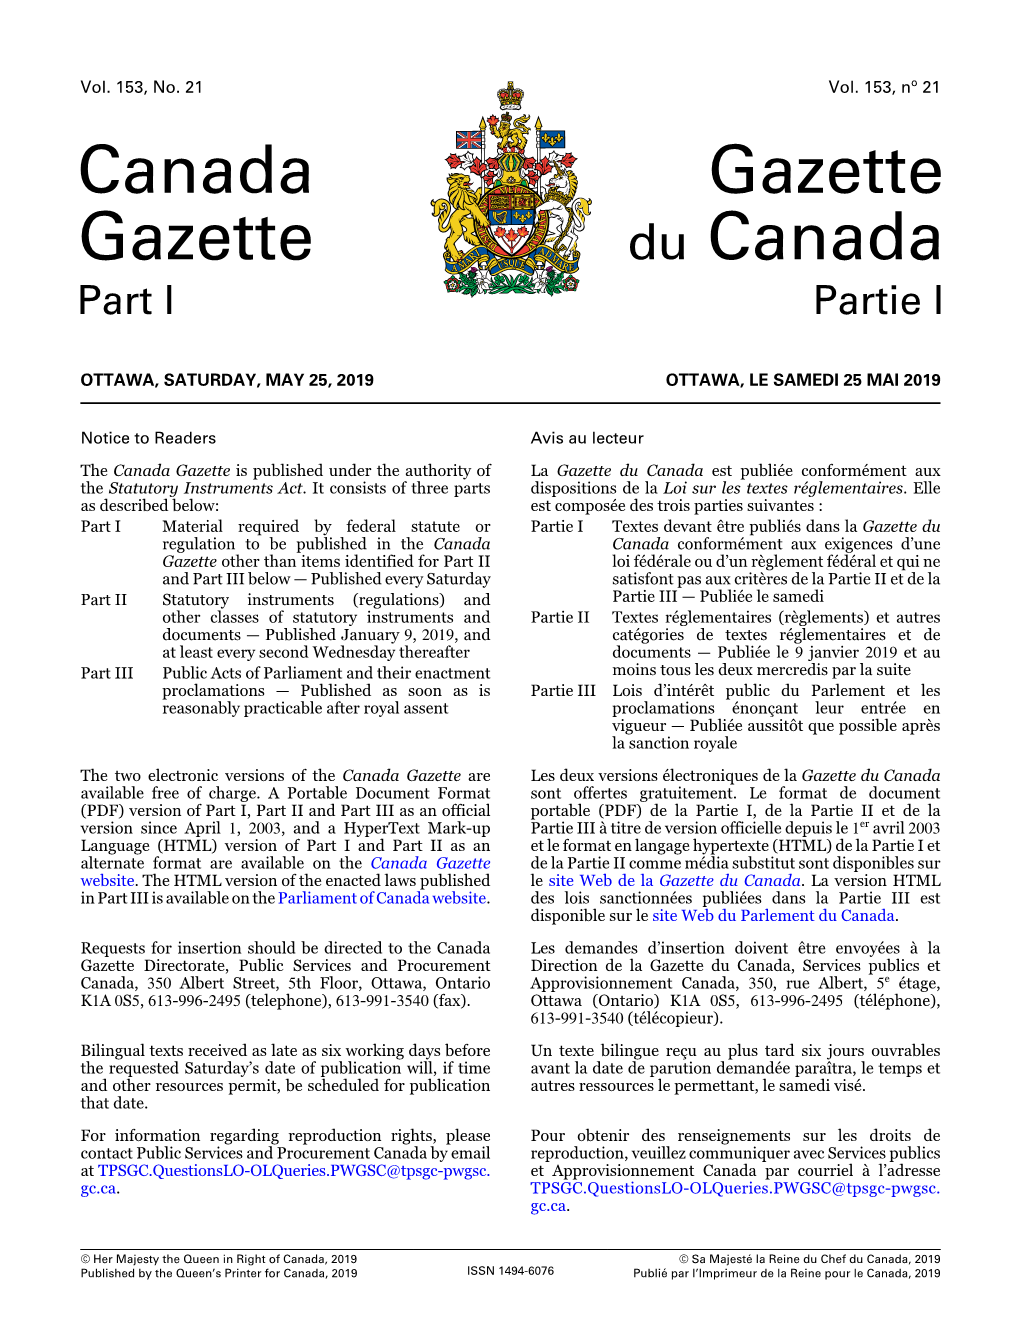 Canada Gazette, Part I, and the Date Avis